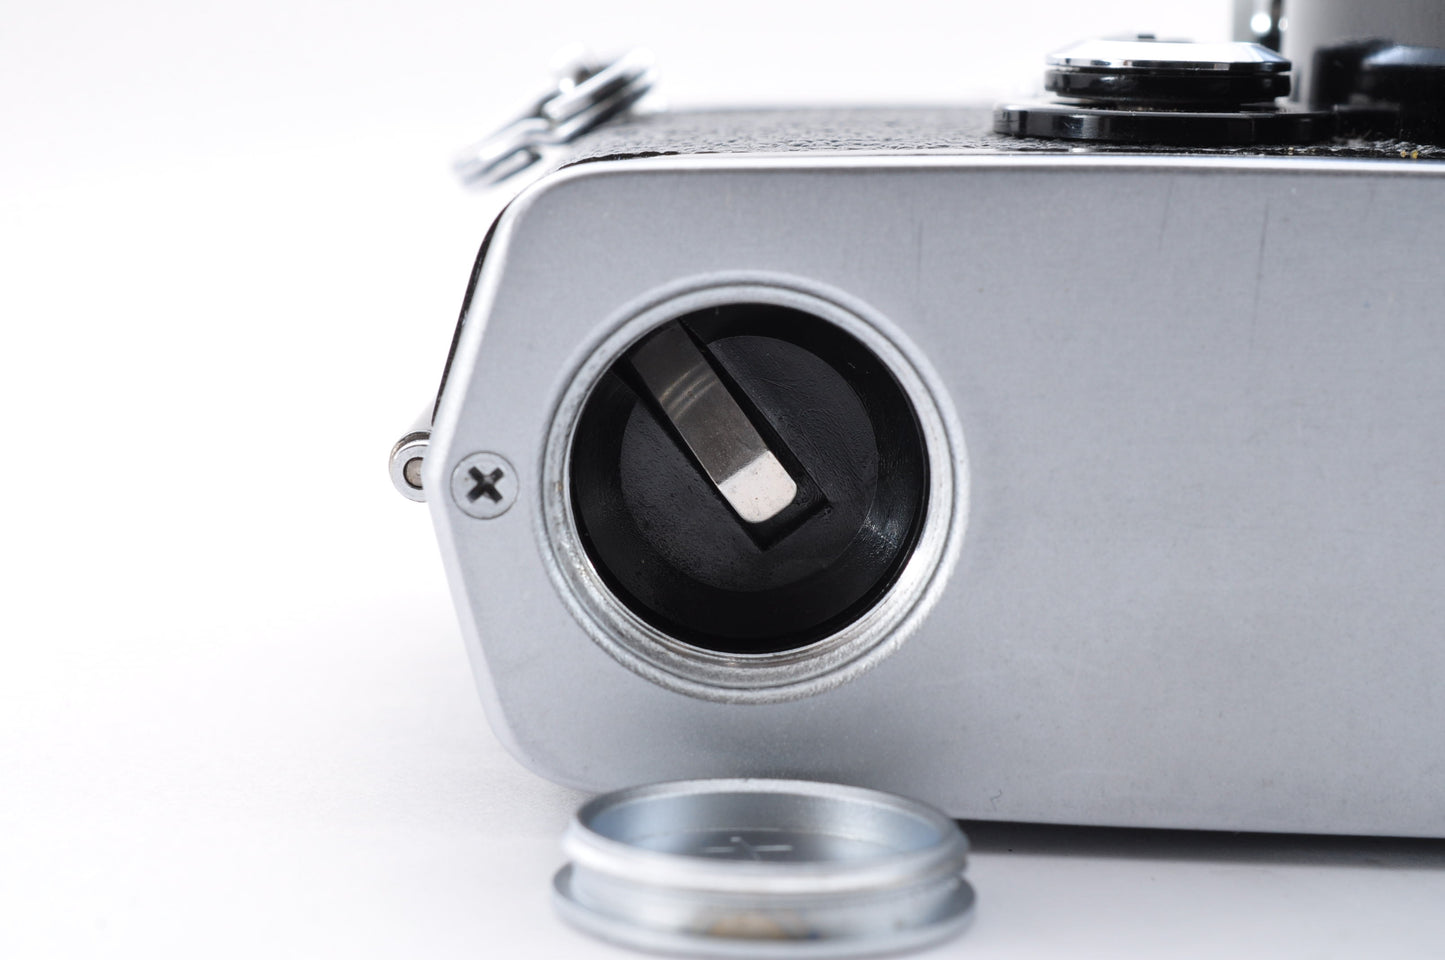 Olympus OM-1 Silver Early model om 1 SLR 35mm Film Camera Body Only  From Japan #207345